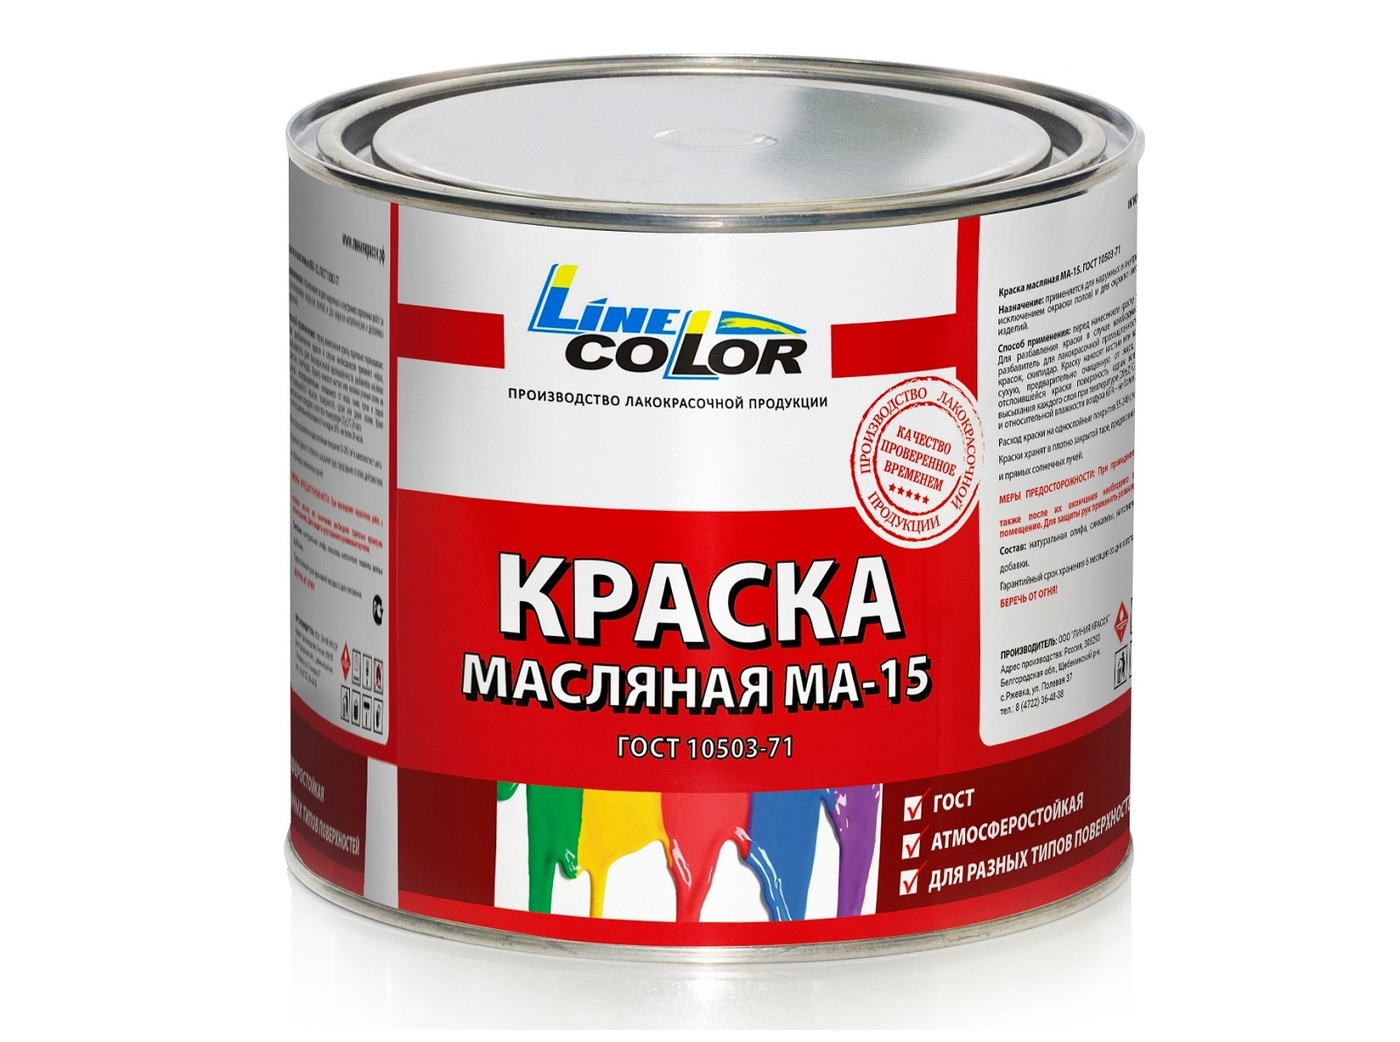 Характеристики Краска Line Color МА-15-Си, Глянцевое покрытие, 2.5 кг ...